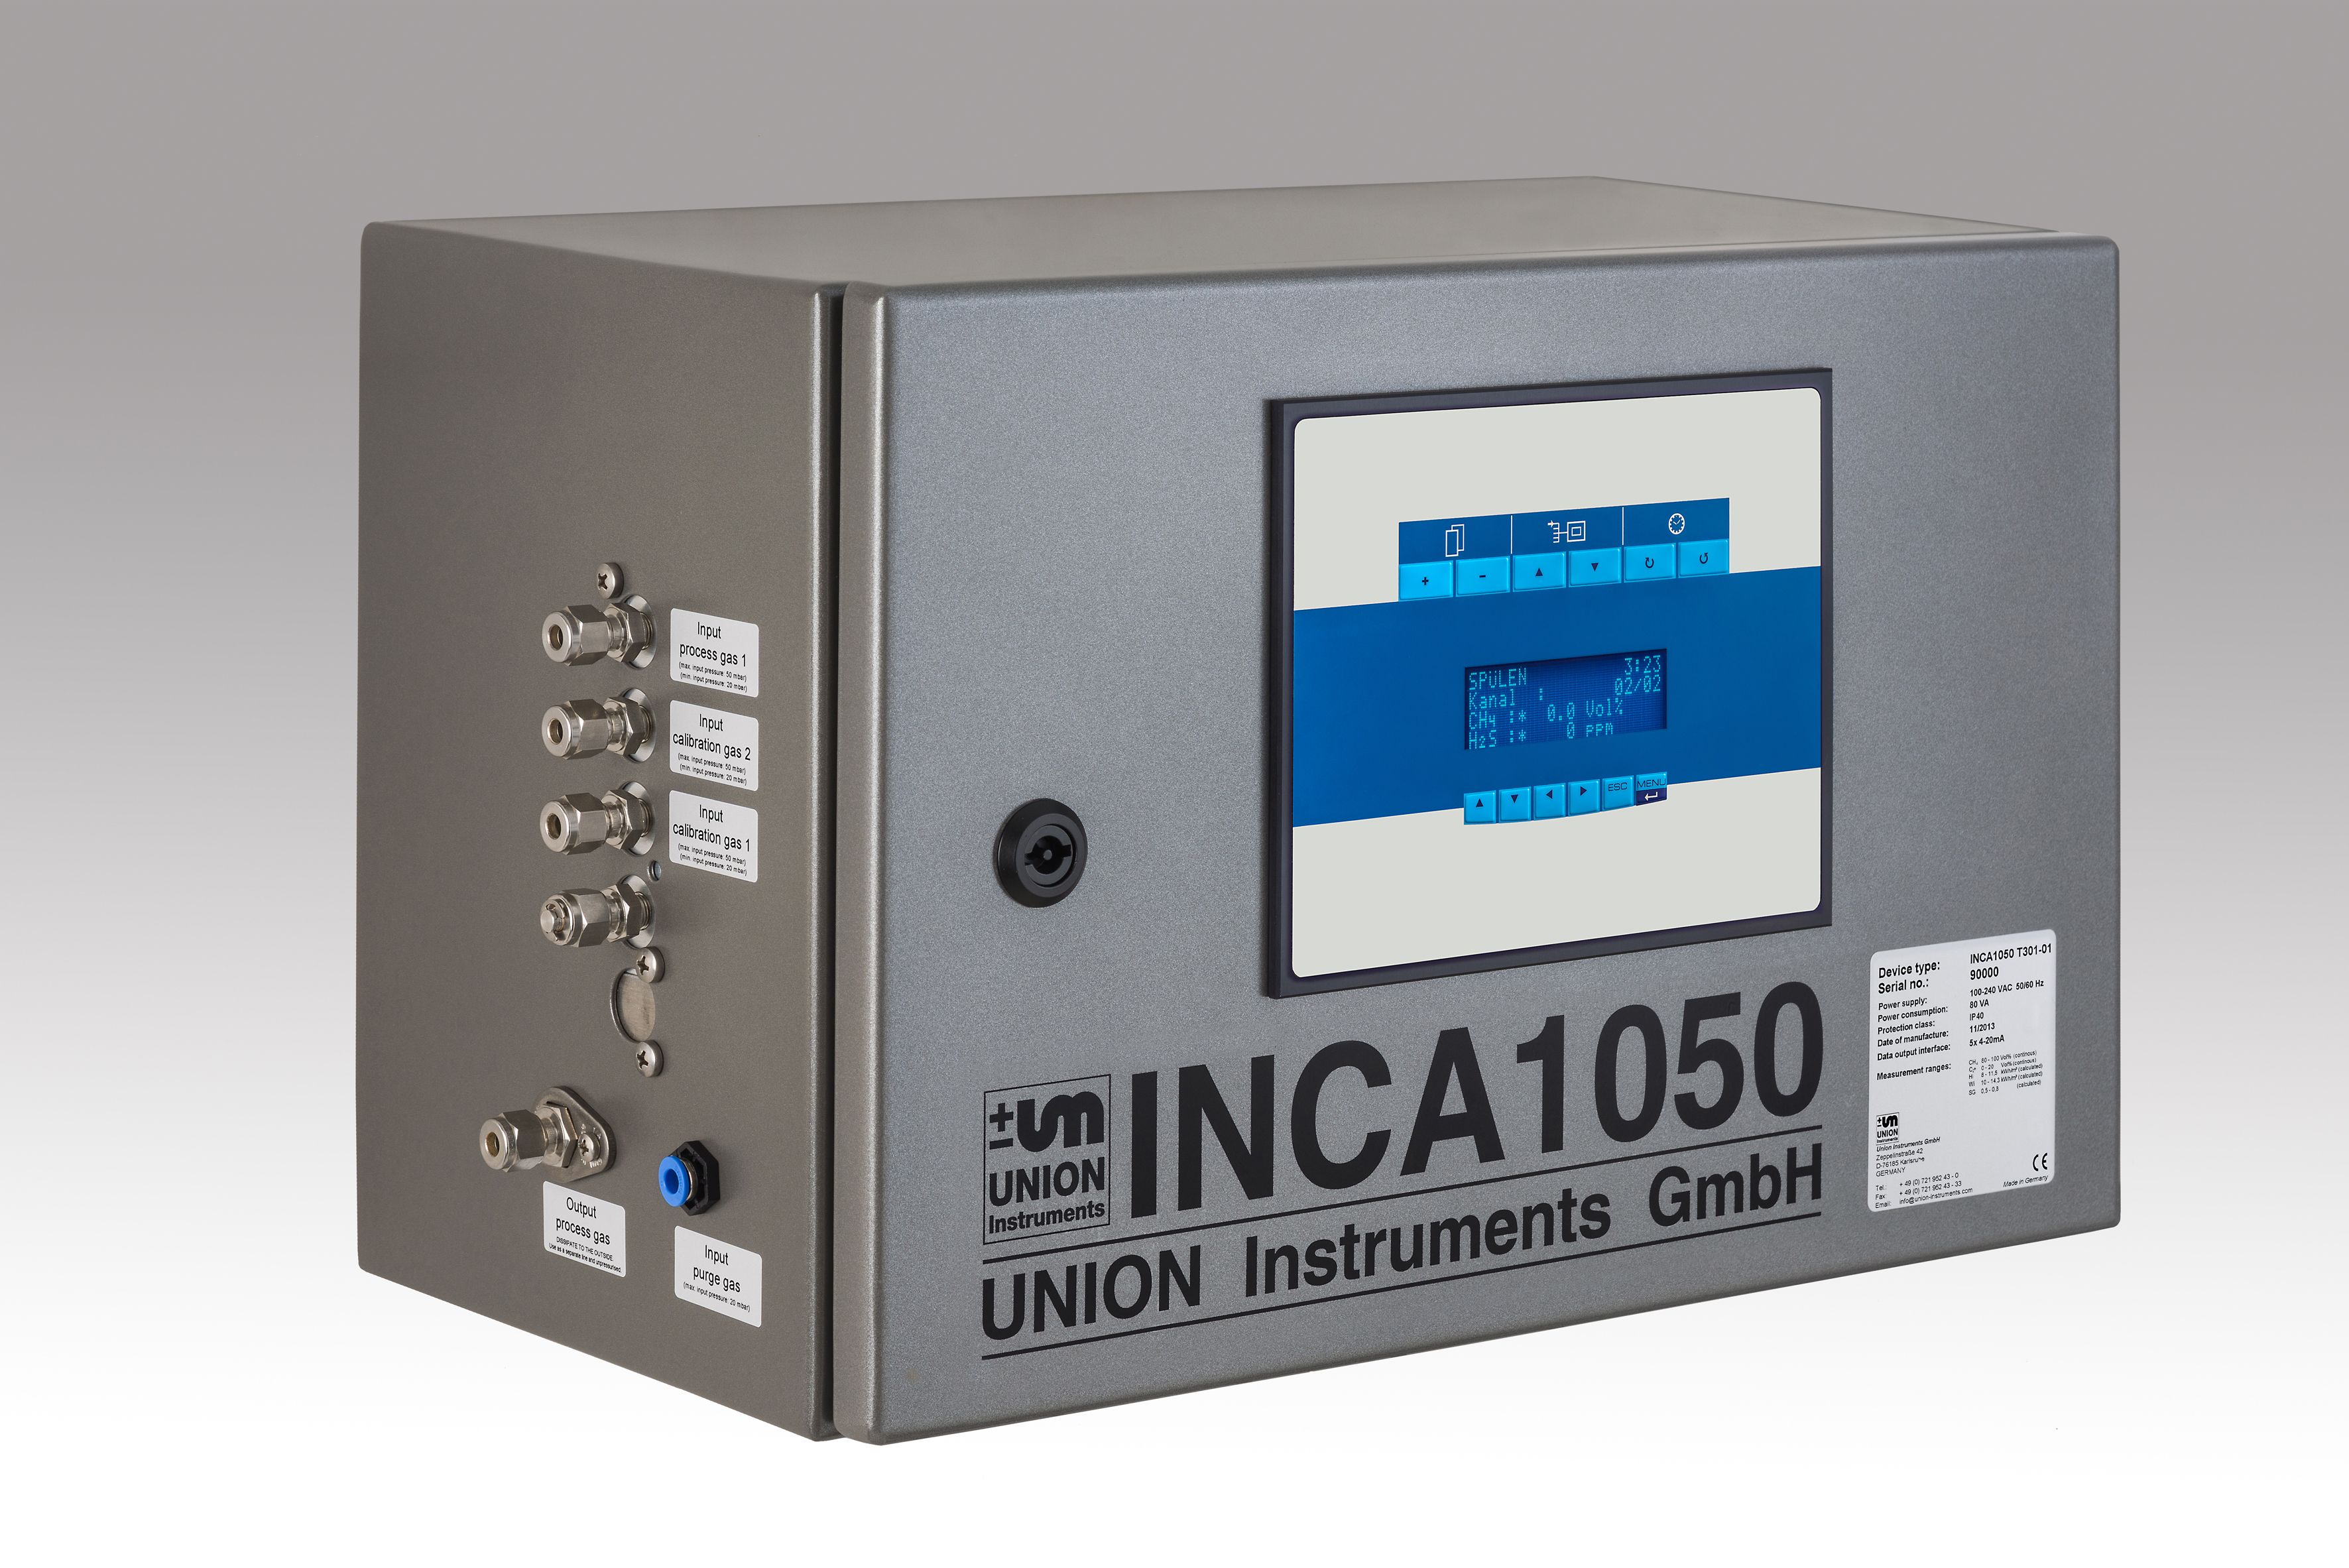 UNION Instruments PM2016 01 MBA Bild2 INCA